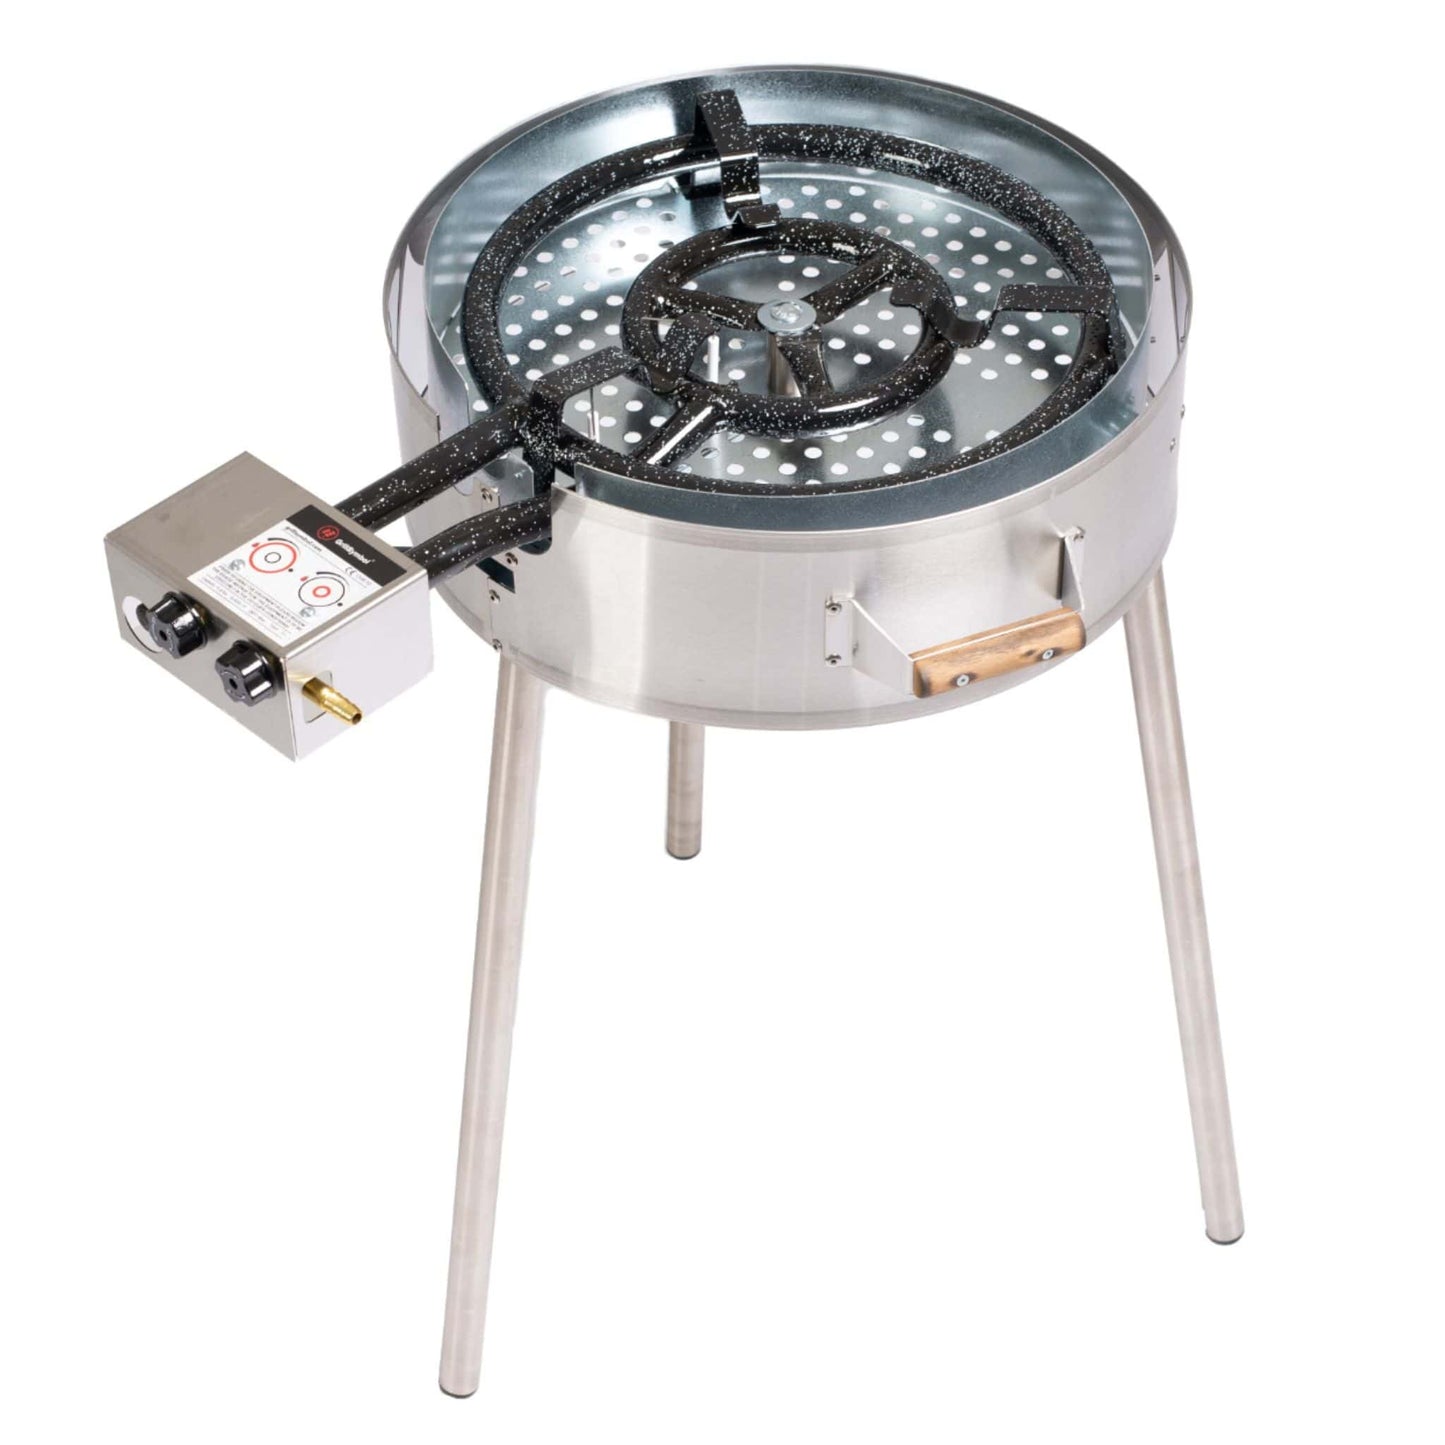 GrillSymbol Outdoor Paella Gas Cooker TW-580